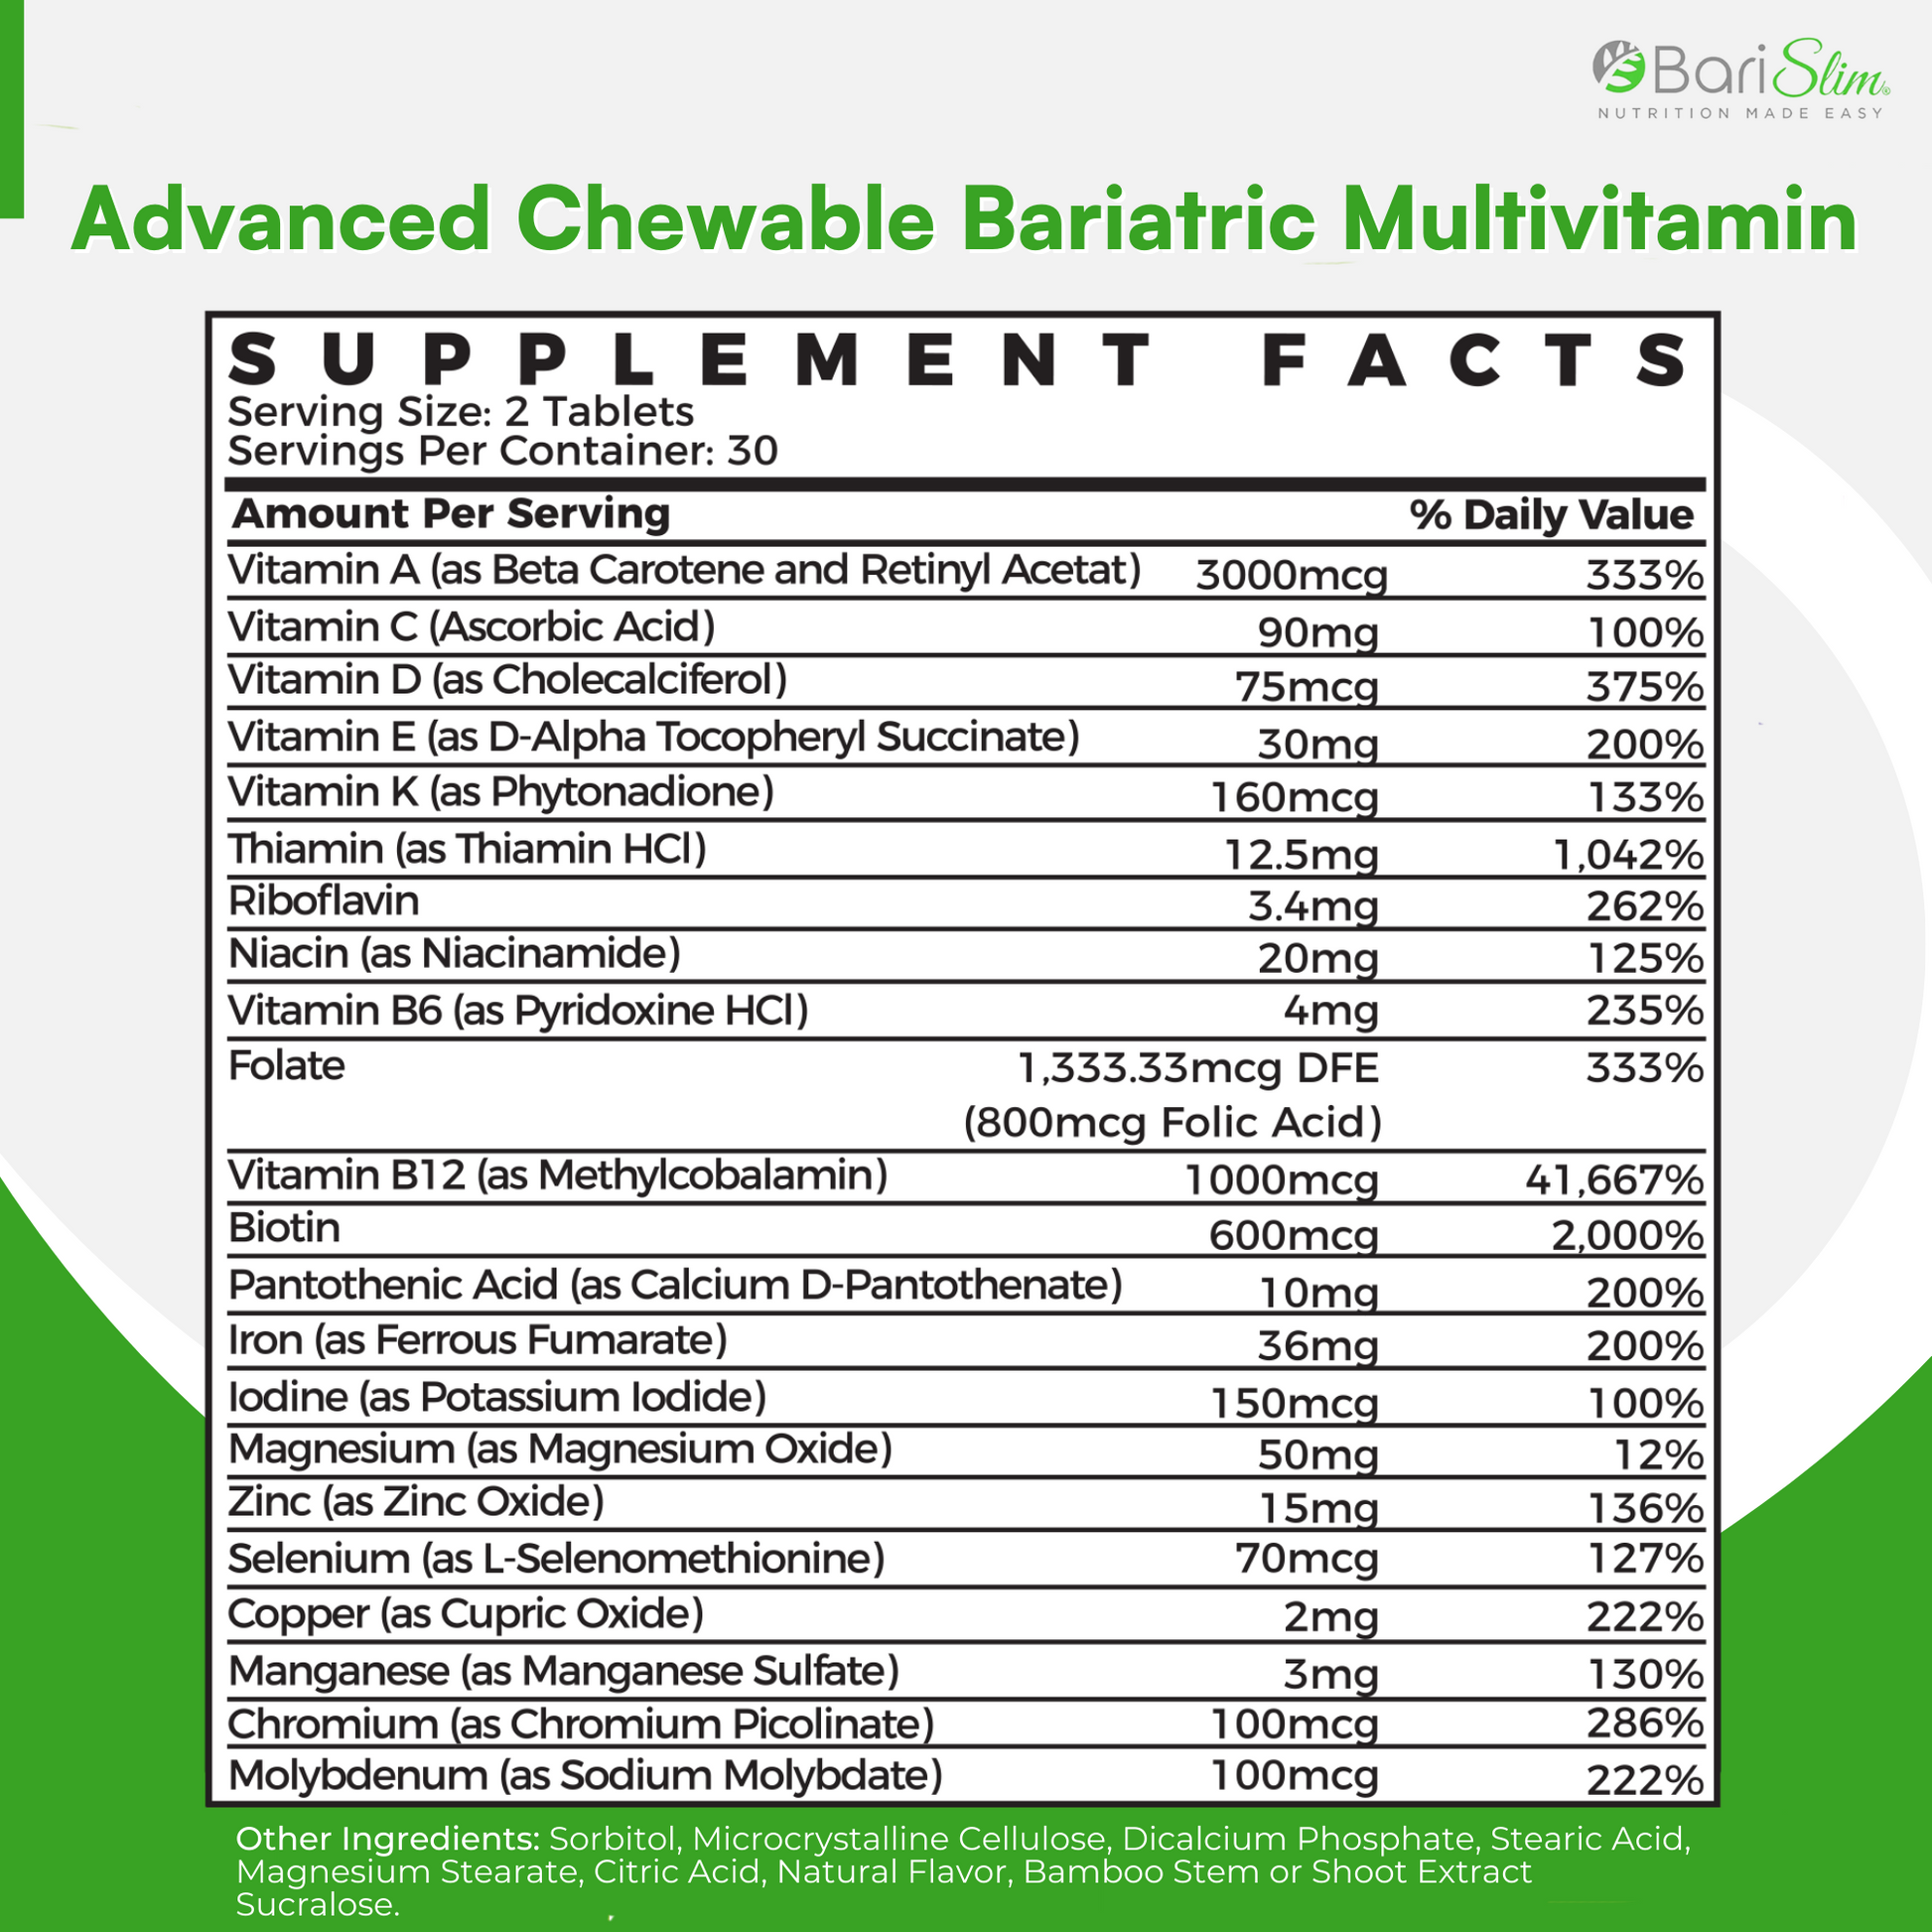 Advanced chewable bariatric multivitamin ingredients